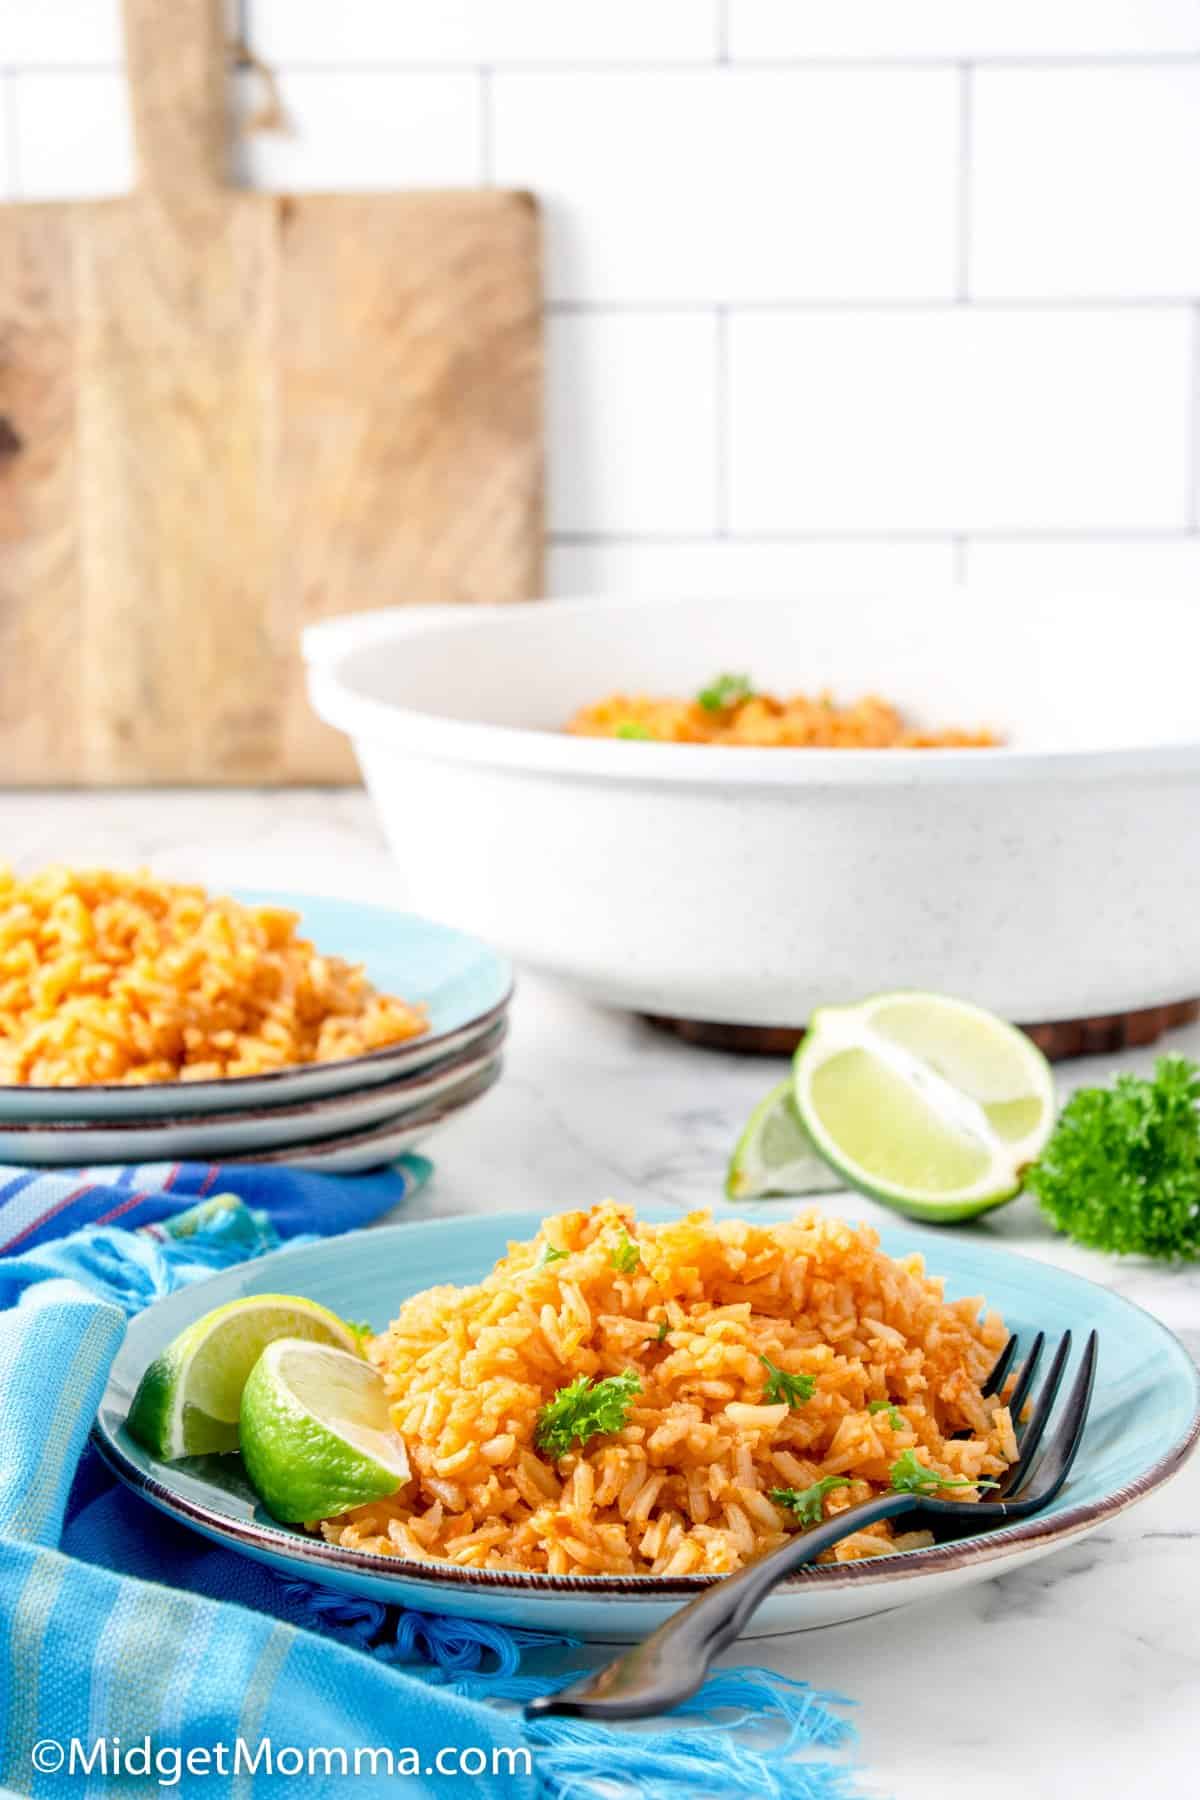 Mexican Rice Recipe